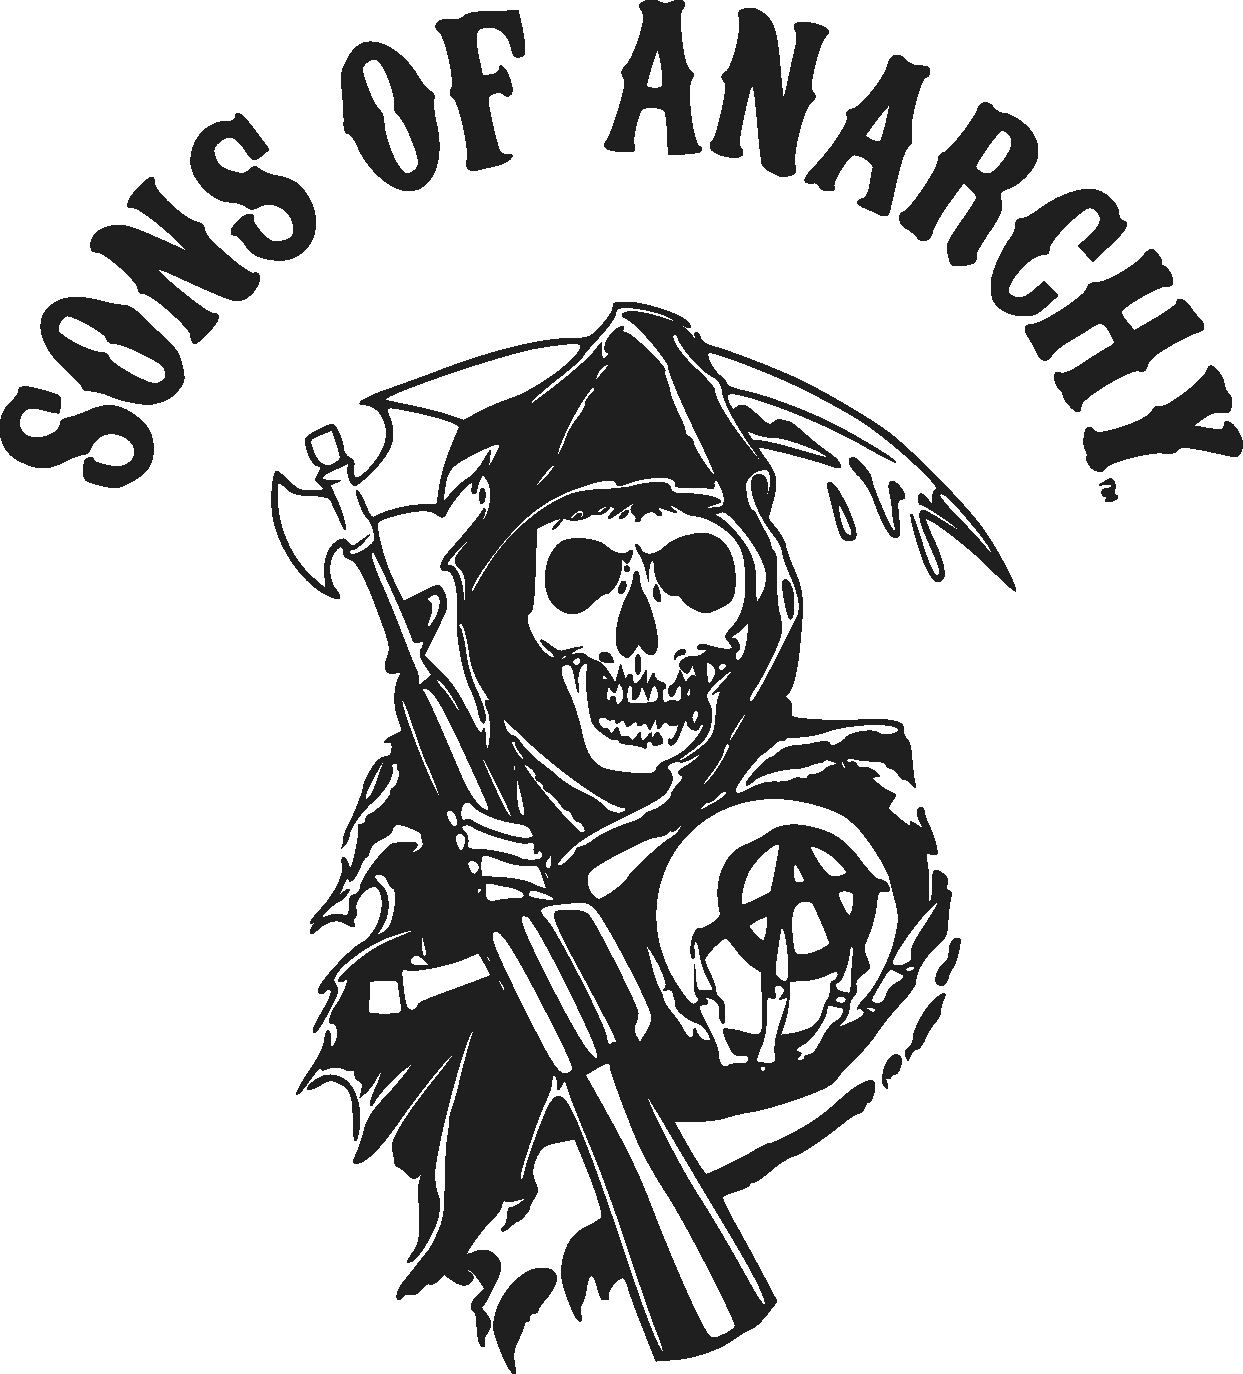 Sonsof Anarchy Logo PNG